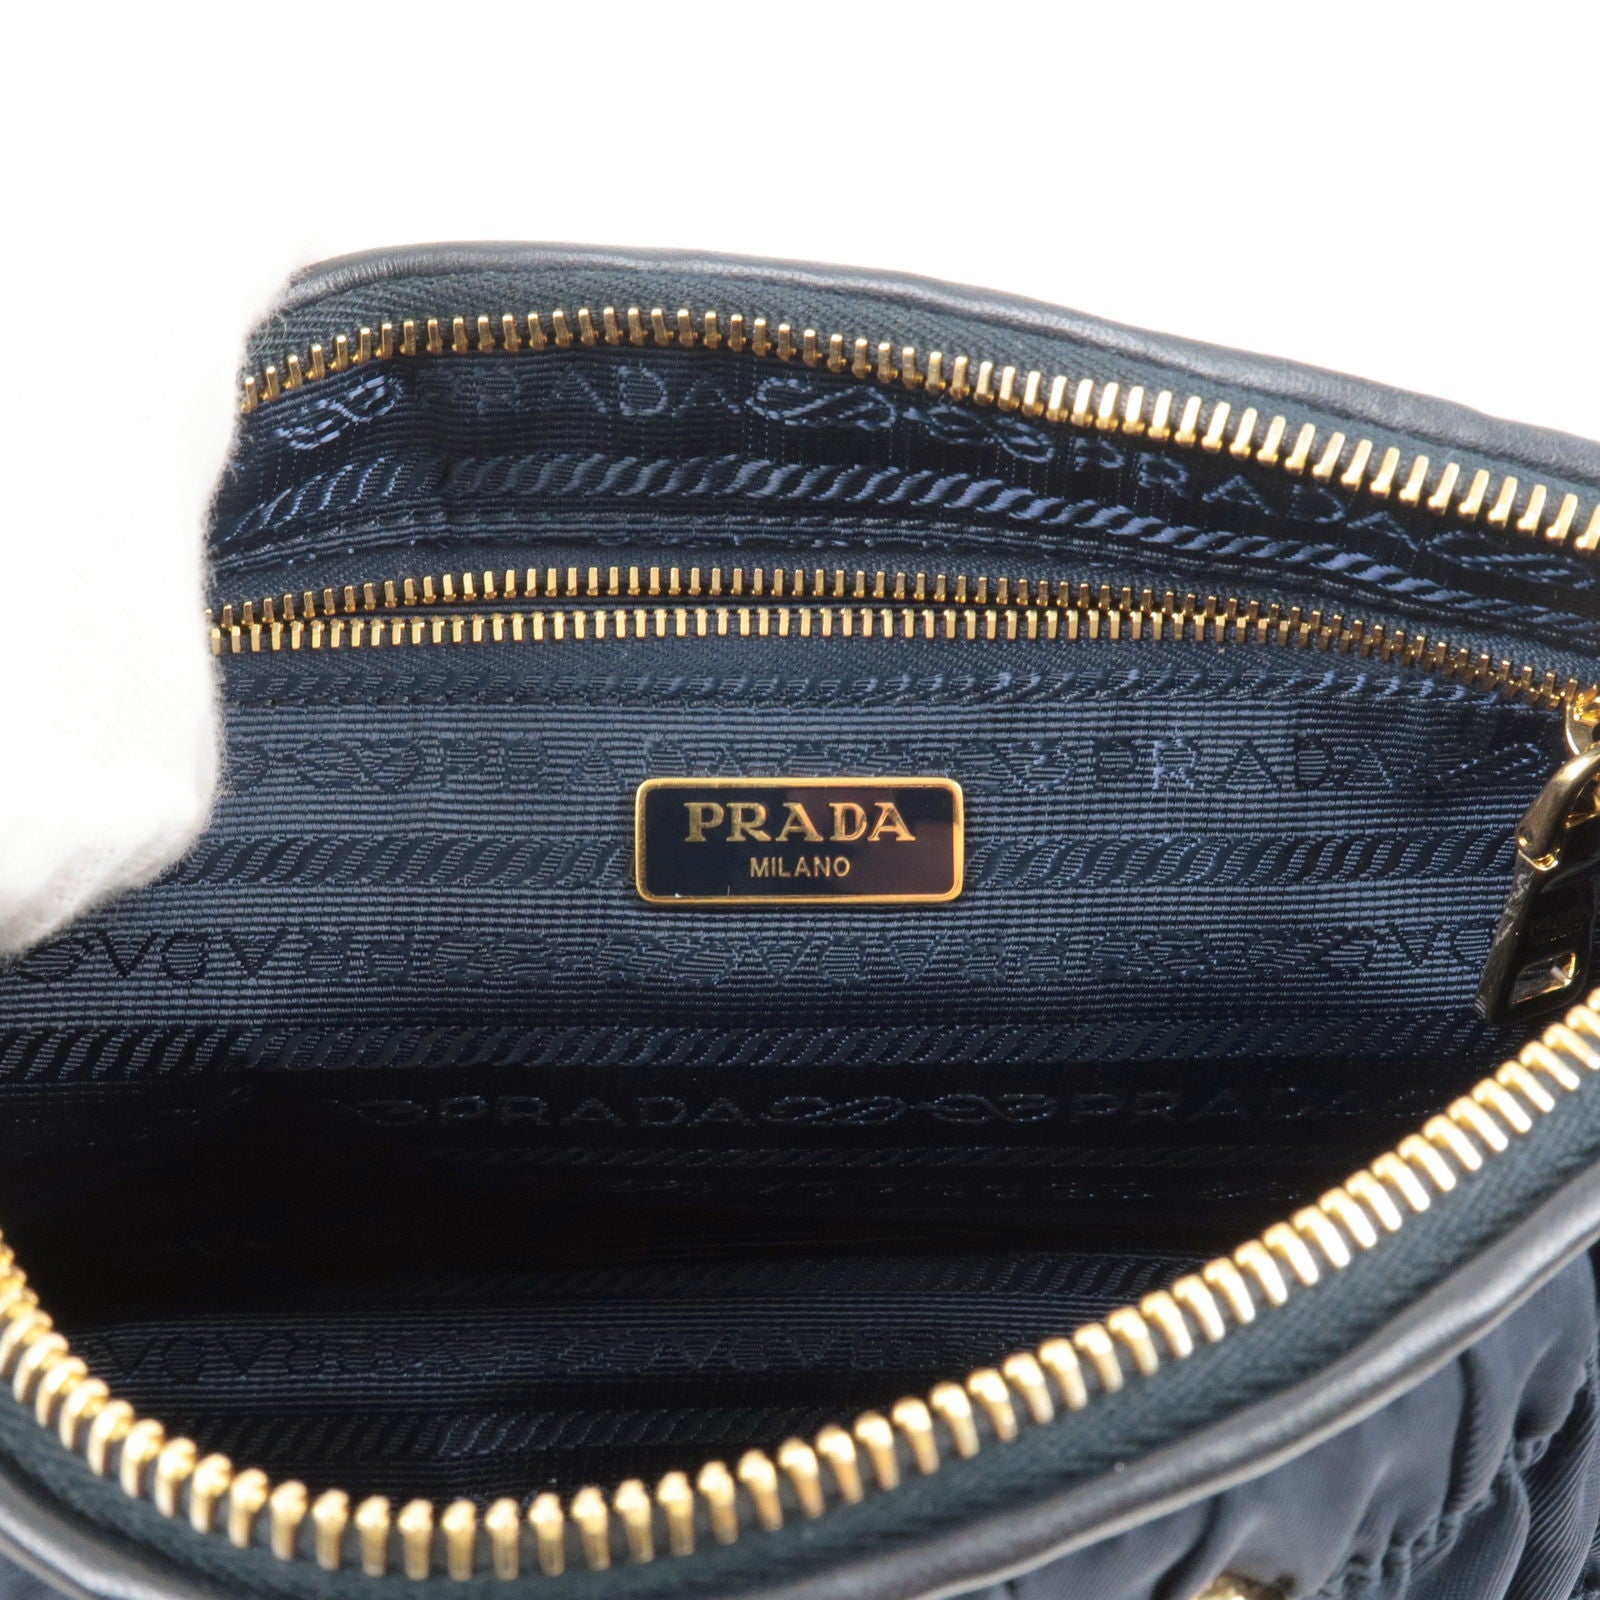 Prada 1BH152 Leather Gaufre Sling Bag Black